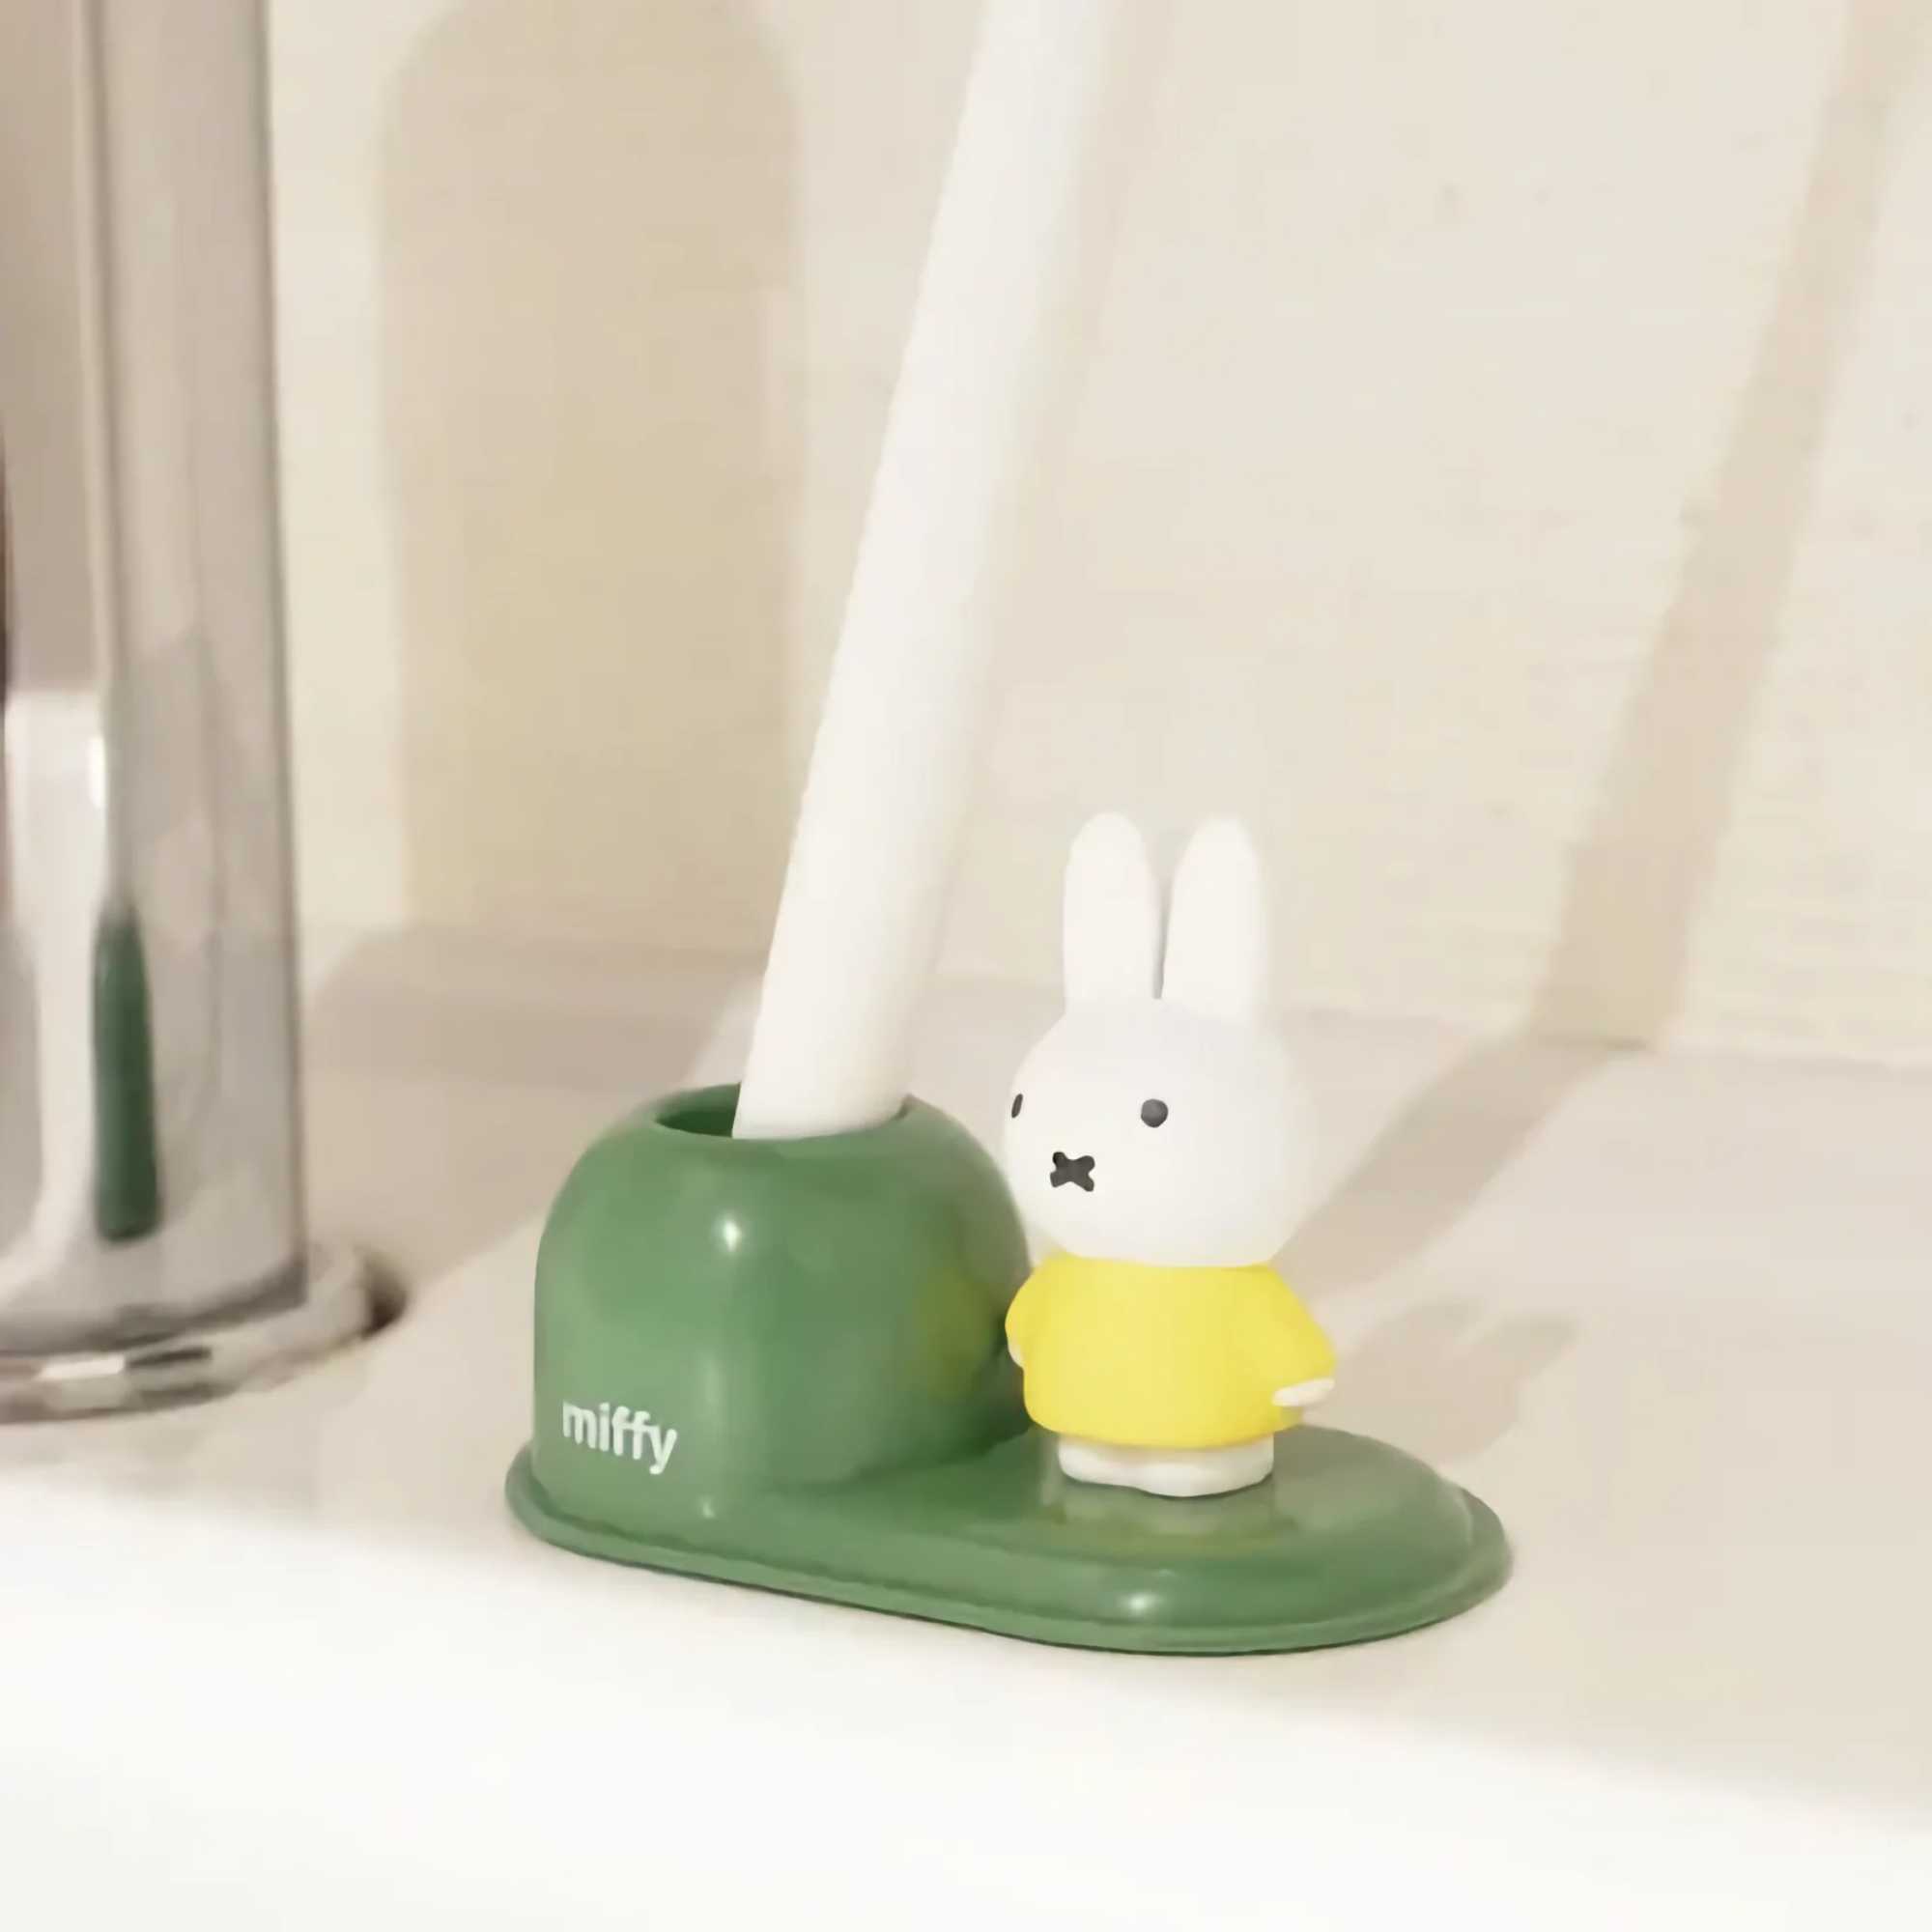 Miffy Toothbrush Stand, Green